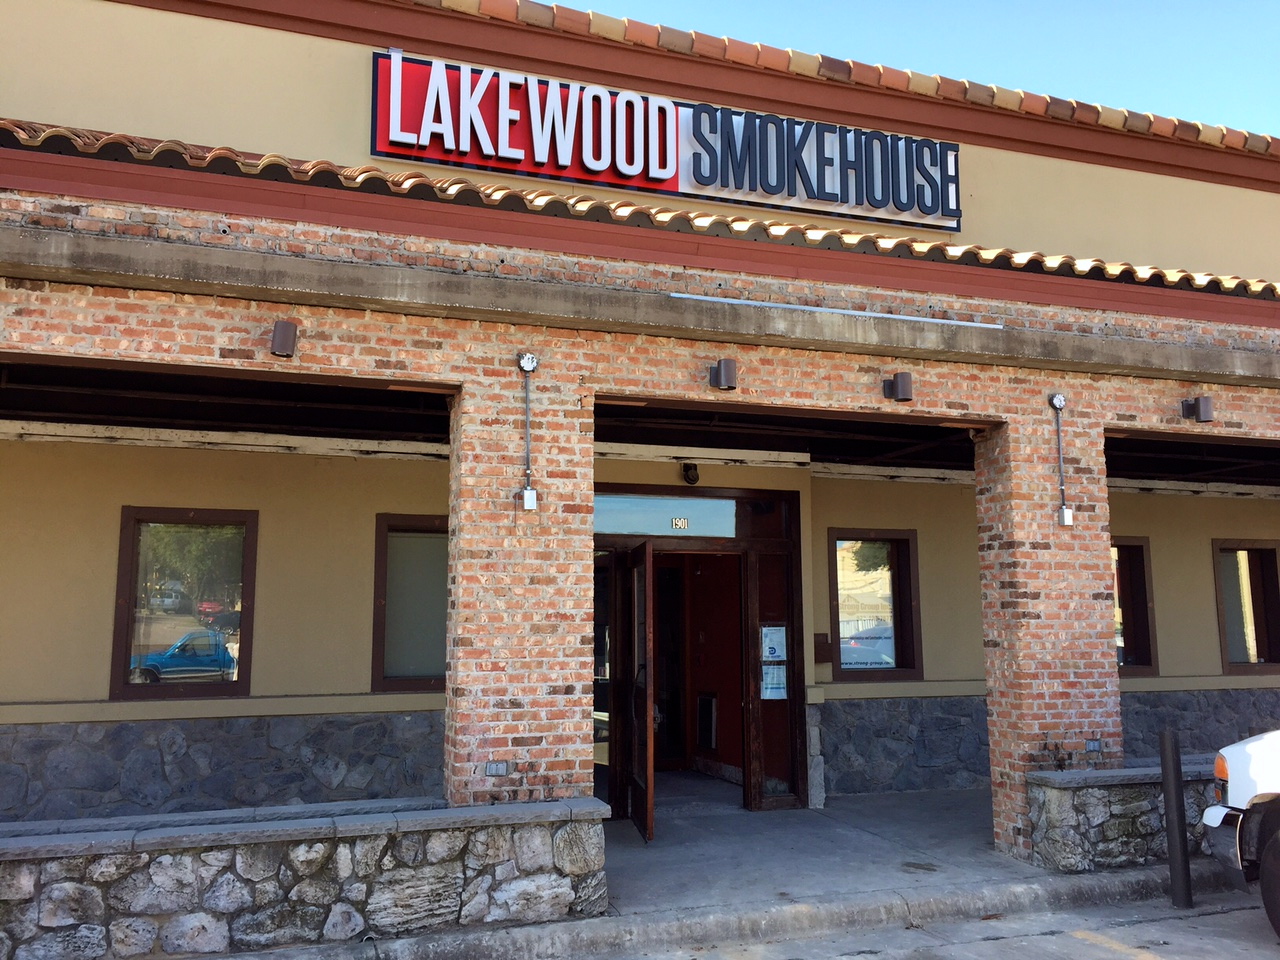 Lakewood Smokehouse